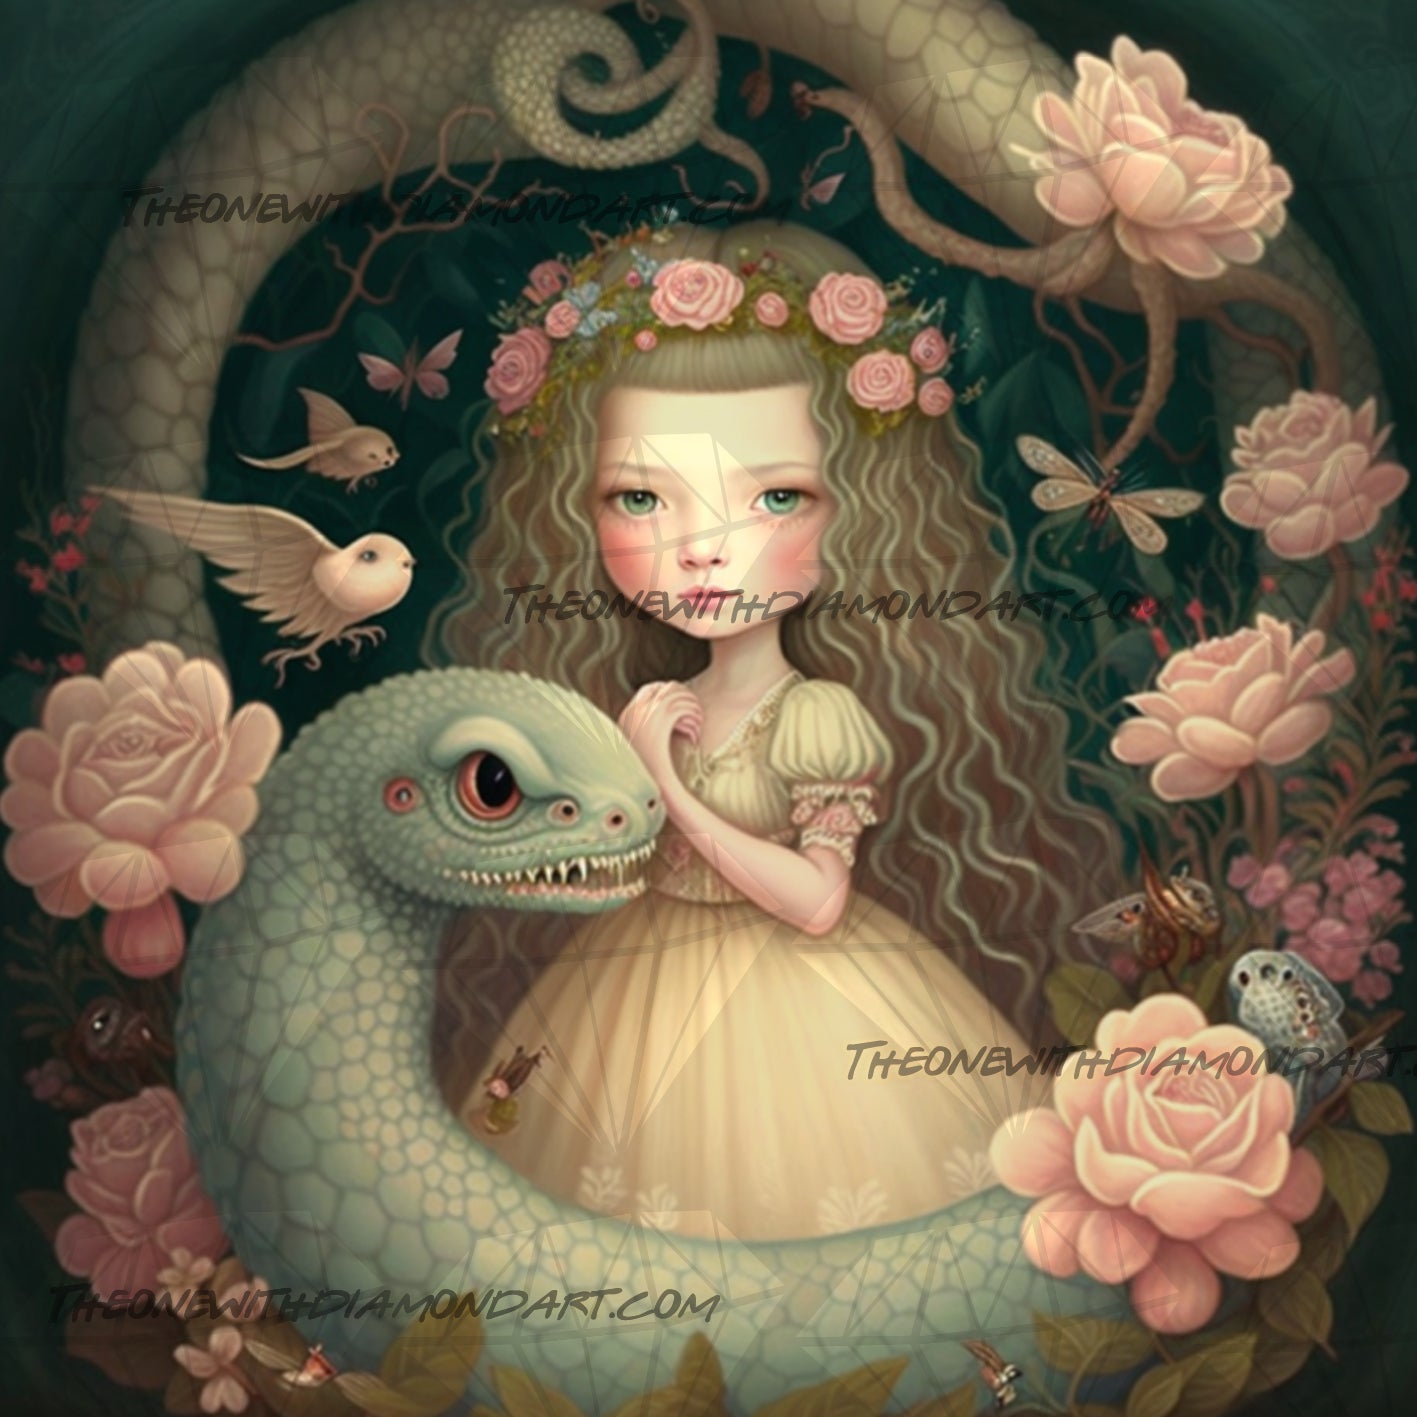 The Serpent Princess ©Finira